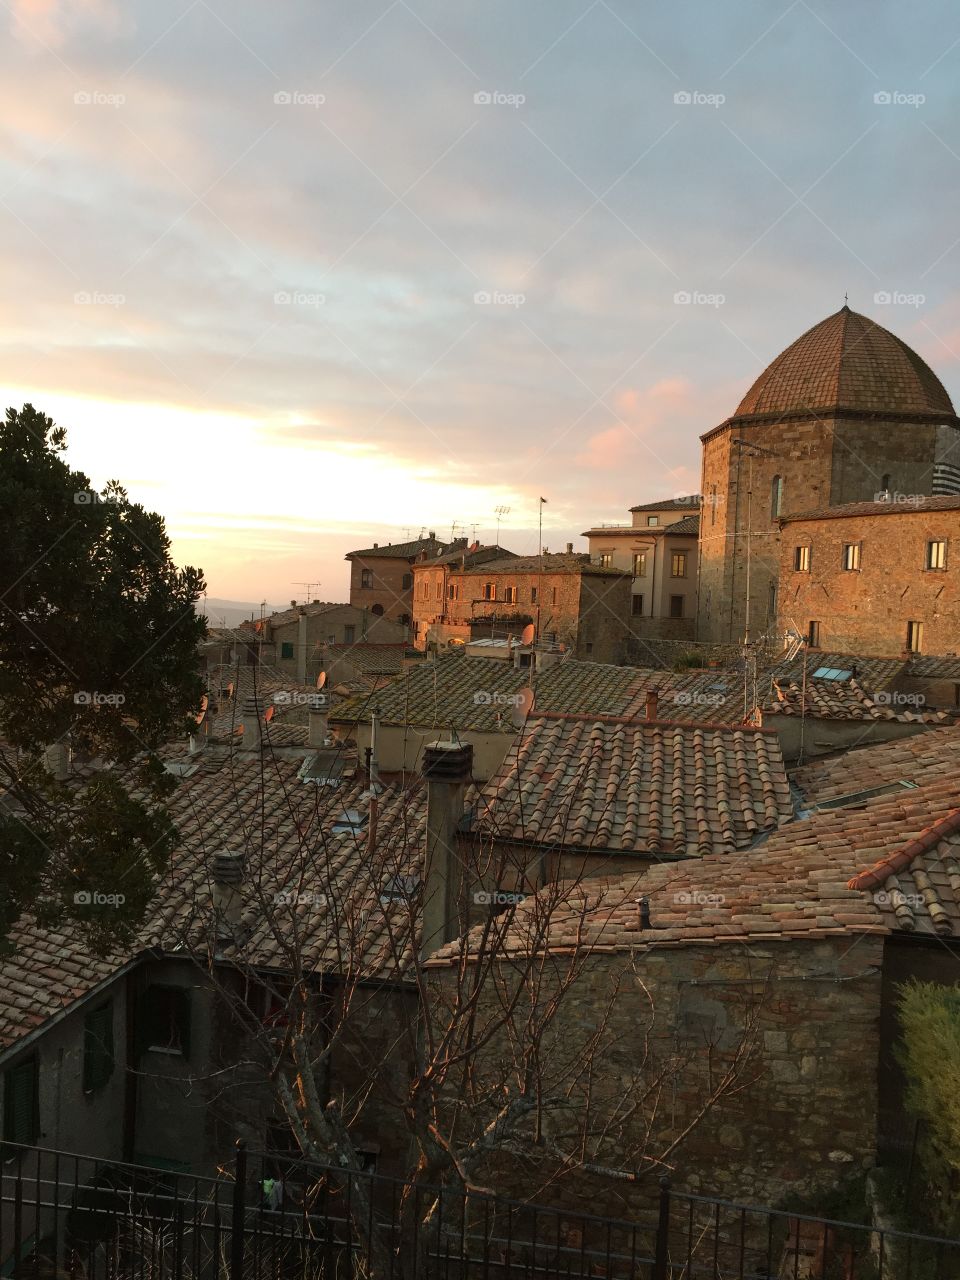 Sunset in Volterra - Italy - borgo antico